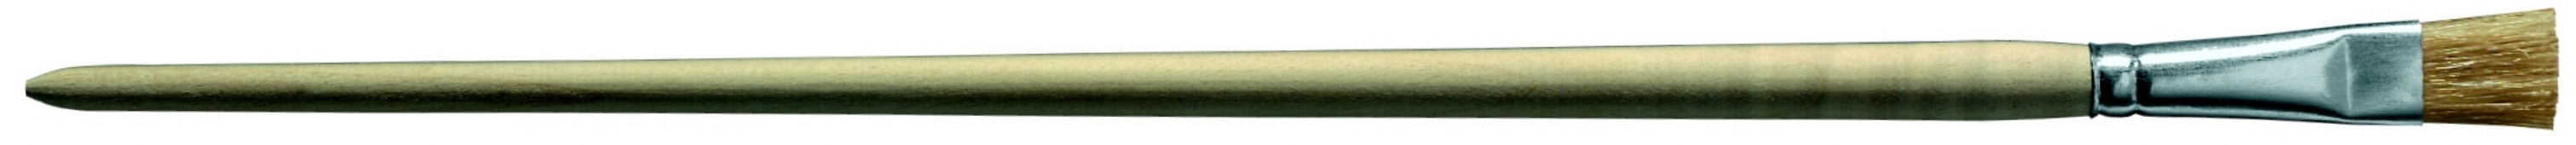 Gussow penseel lange steel, no.14